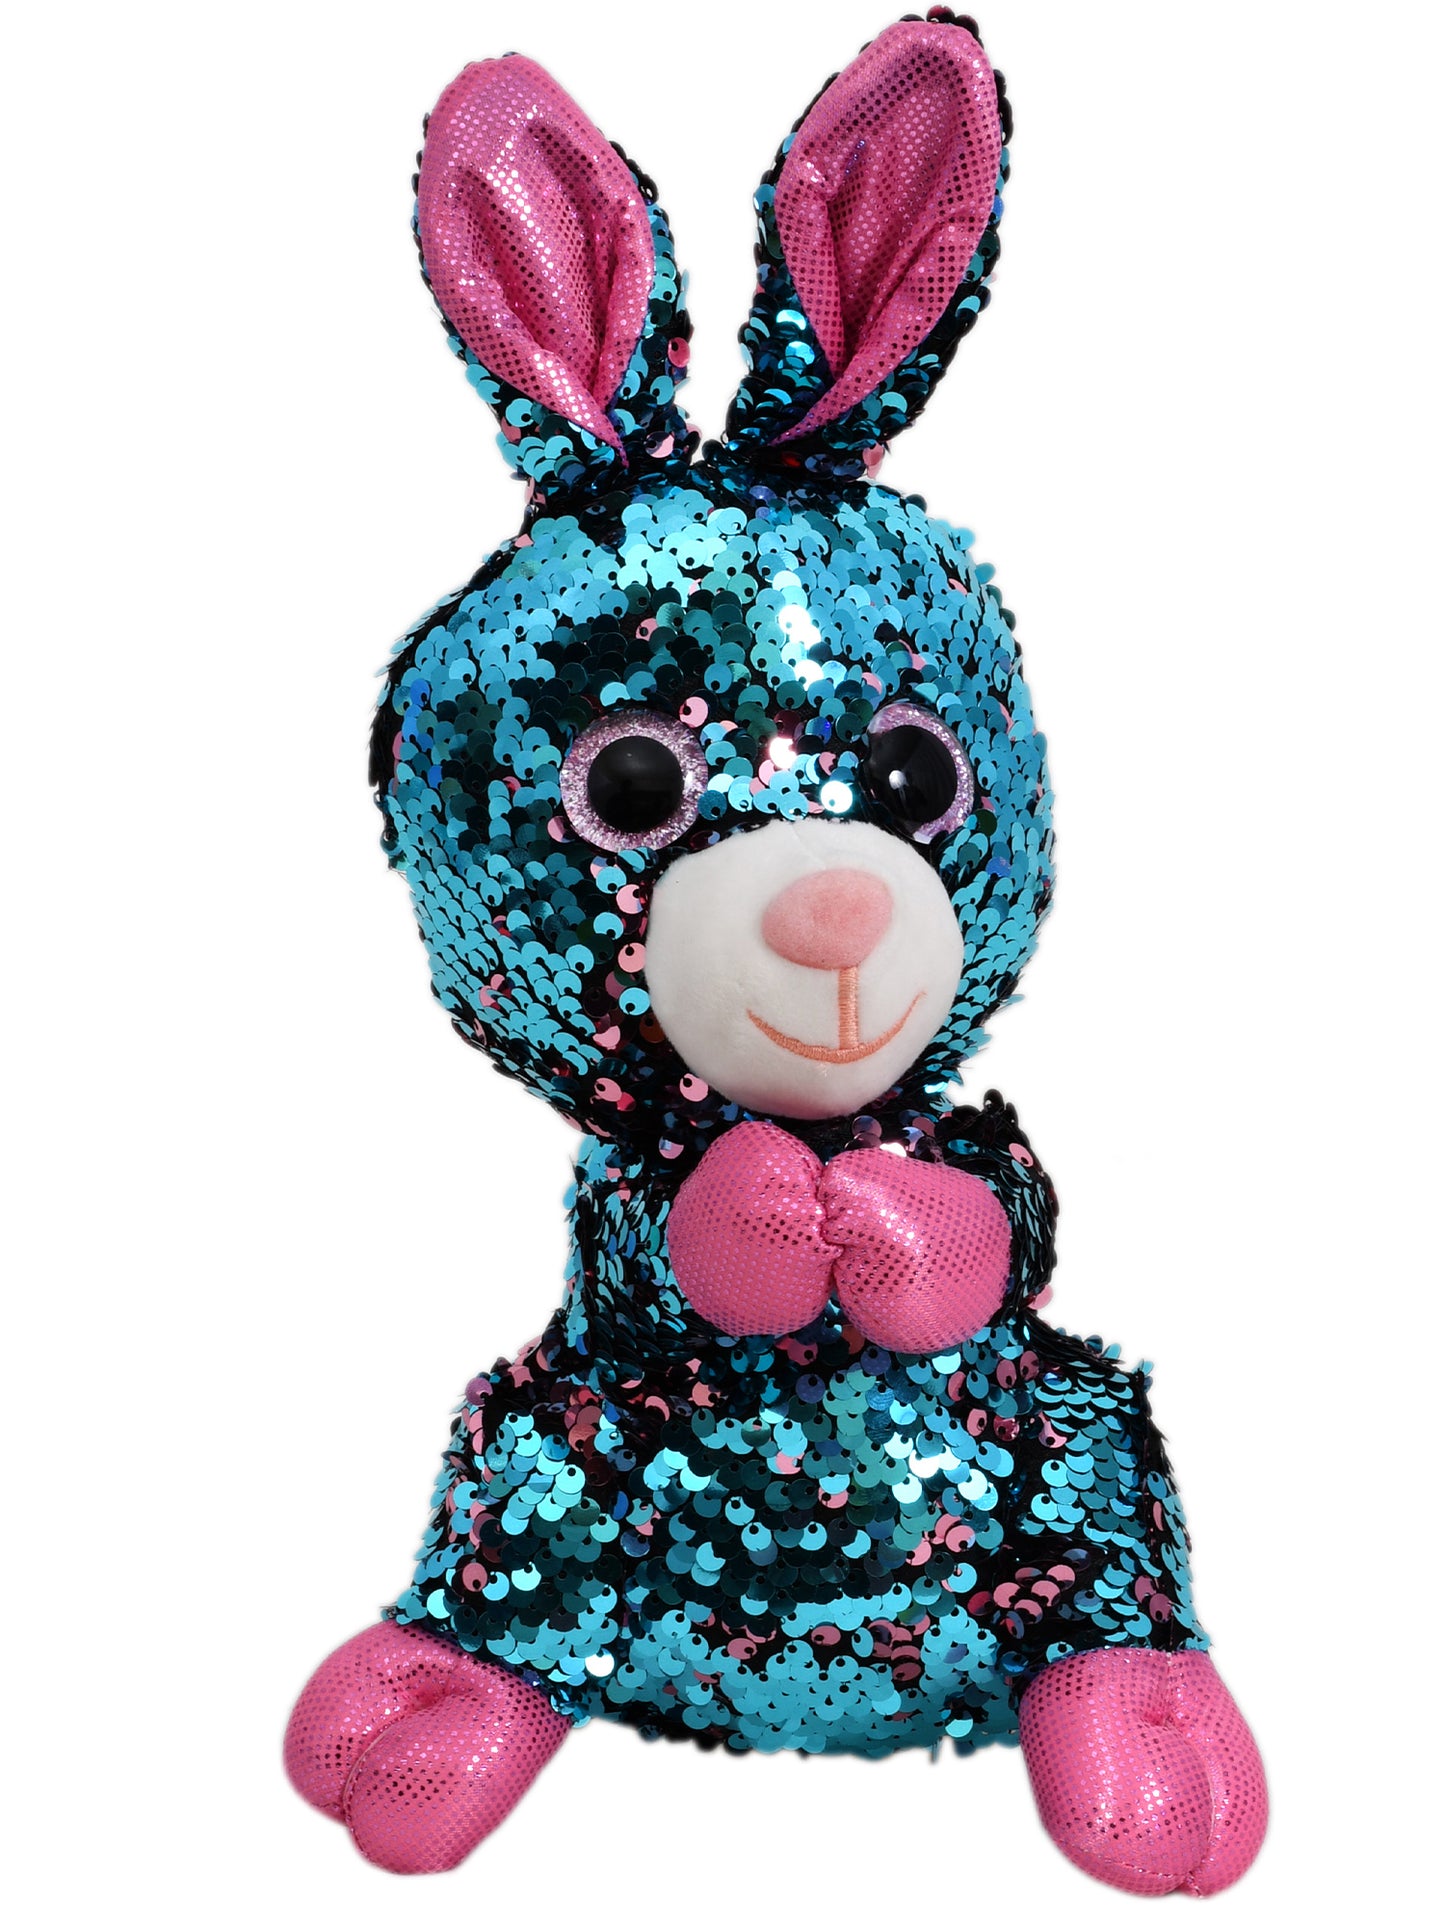 Mirada Blue Sequin Cute Plush Bunny with Glitter Eye Stuffed Soft Toy - 23 cm